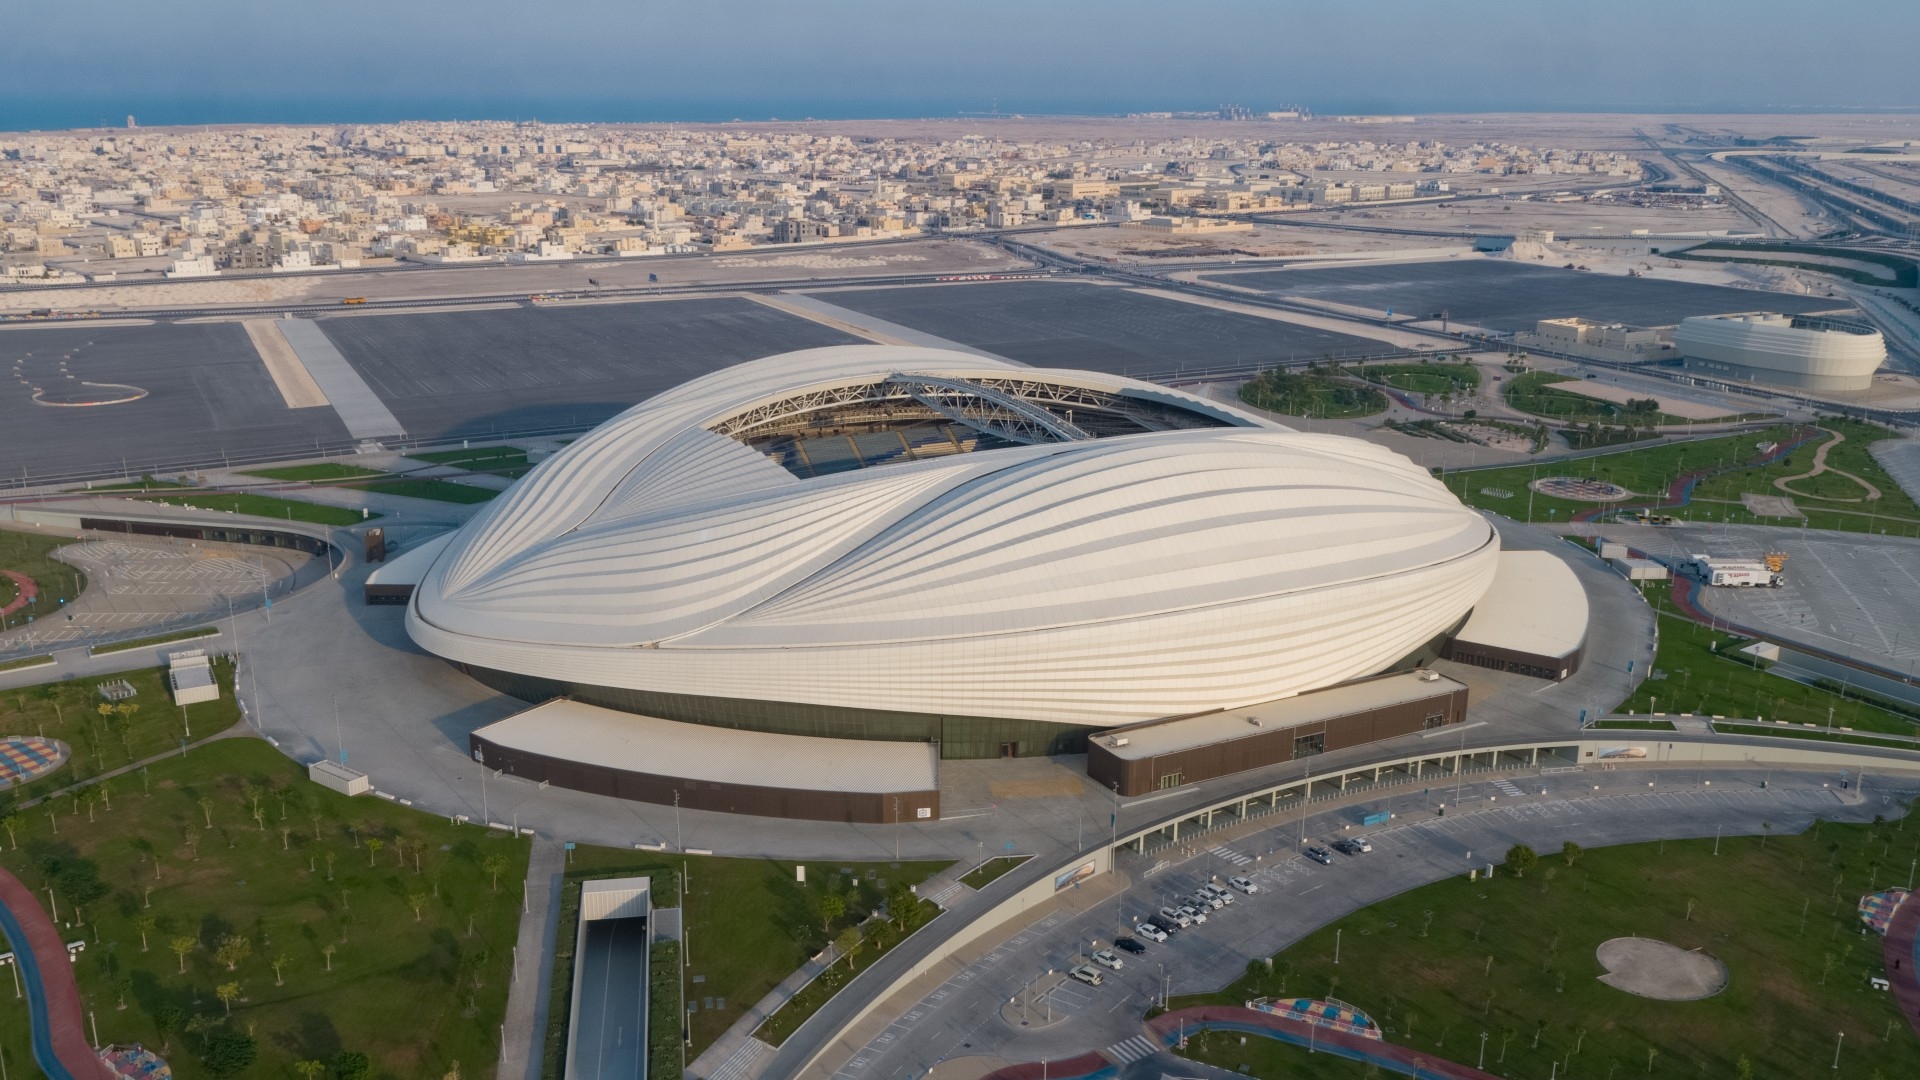 The Al Janoub Stadium was designed by the late world-renowned architect Dame Zaha Hadid (Courtesy Qatar 2022)